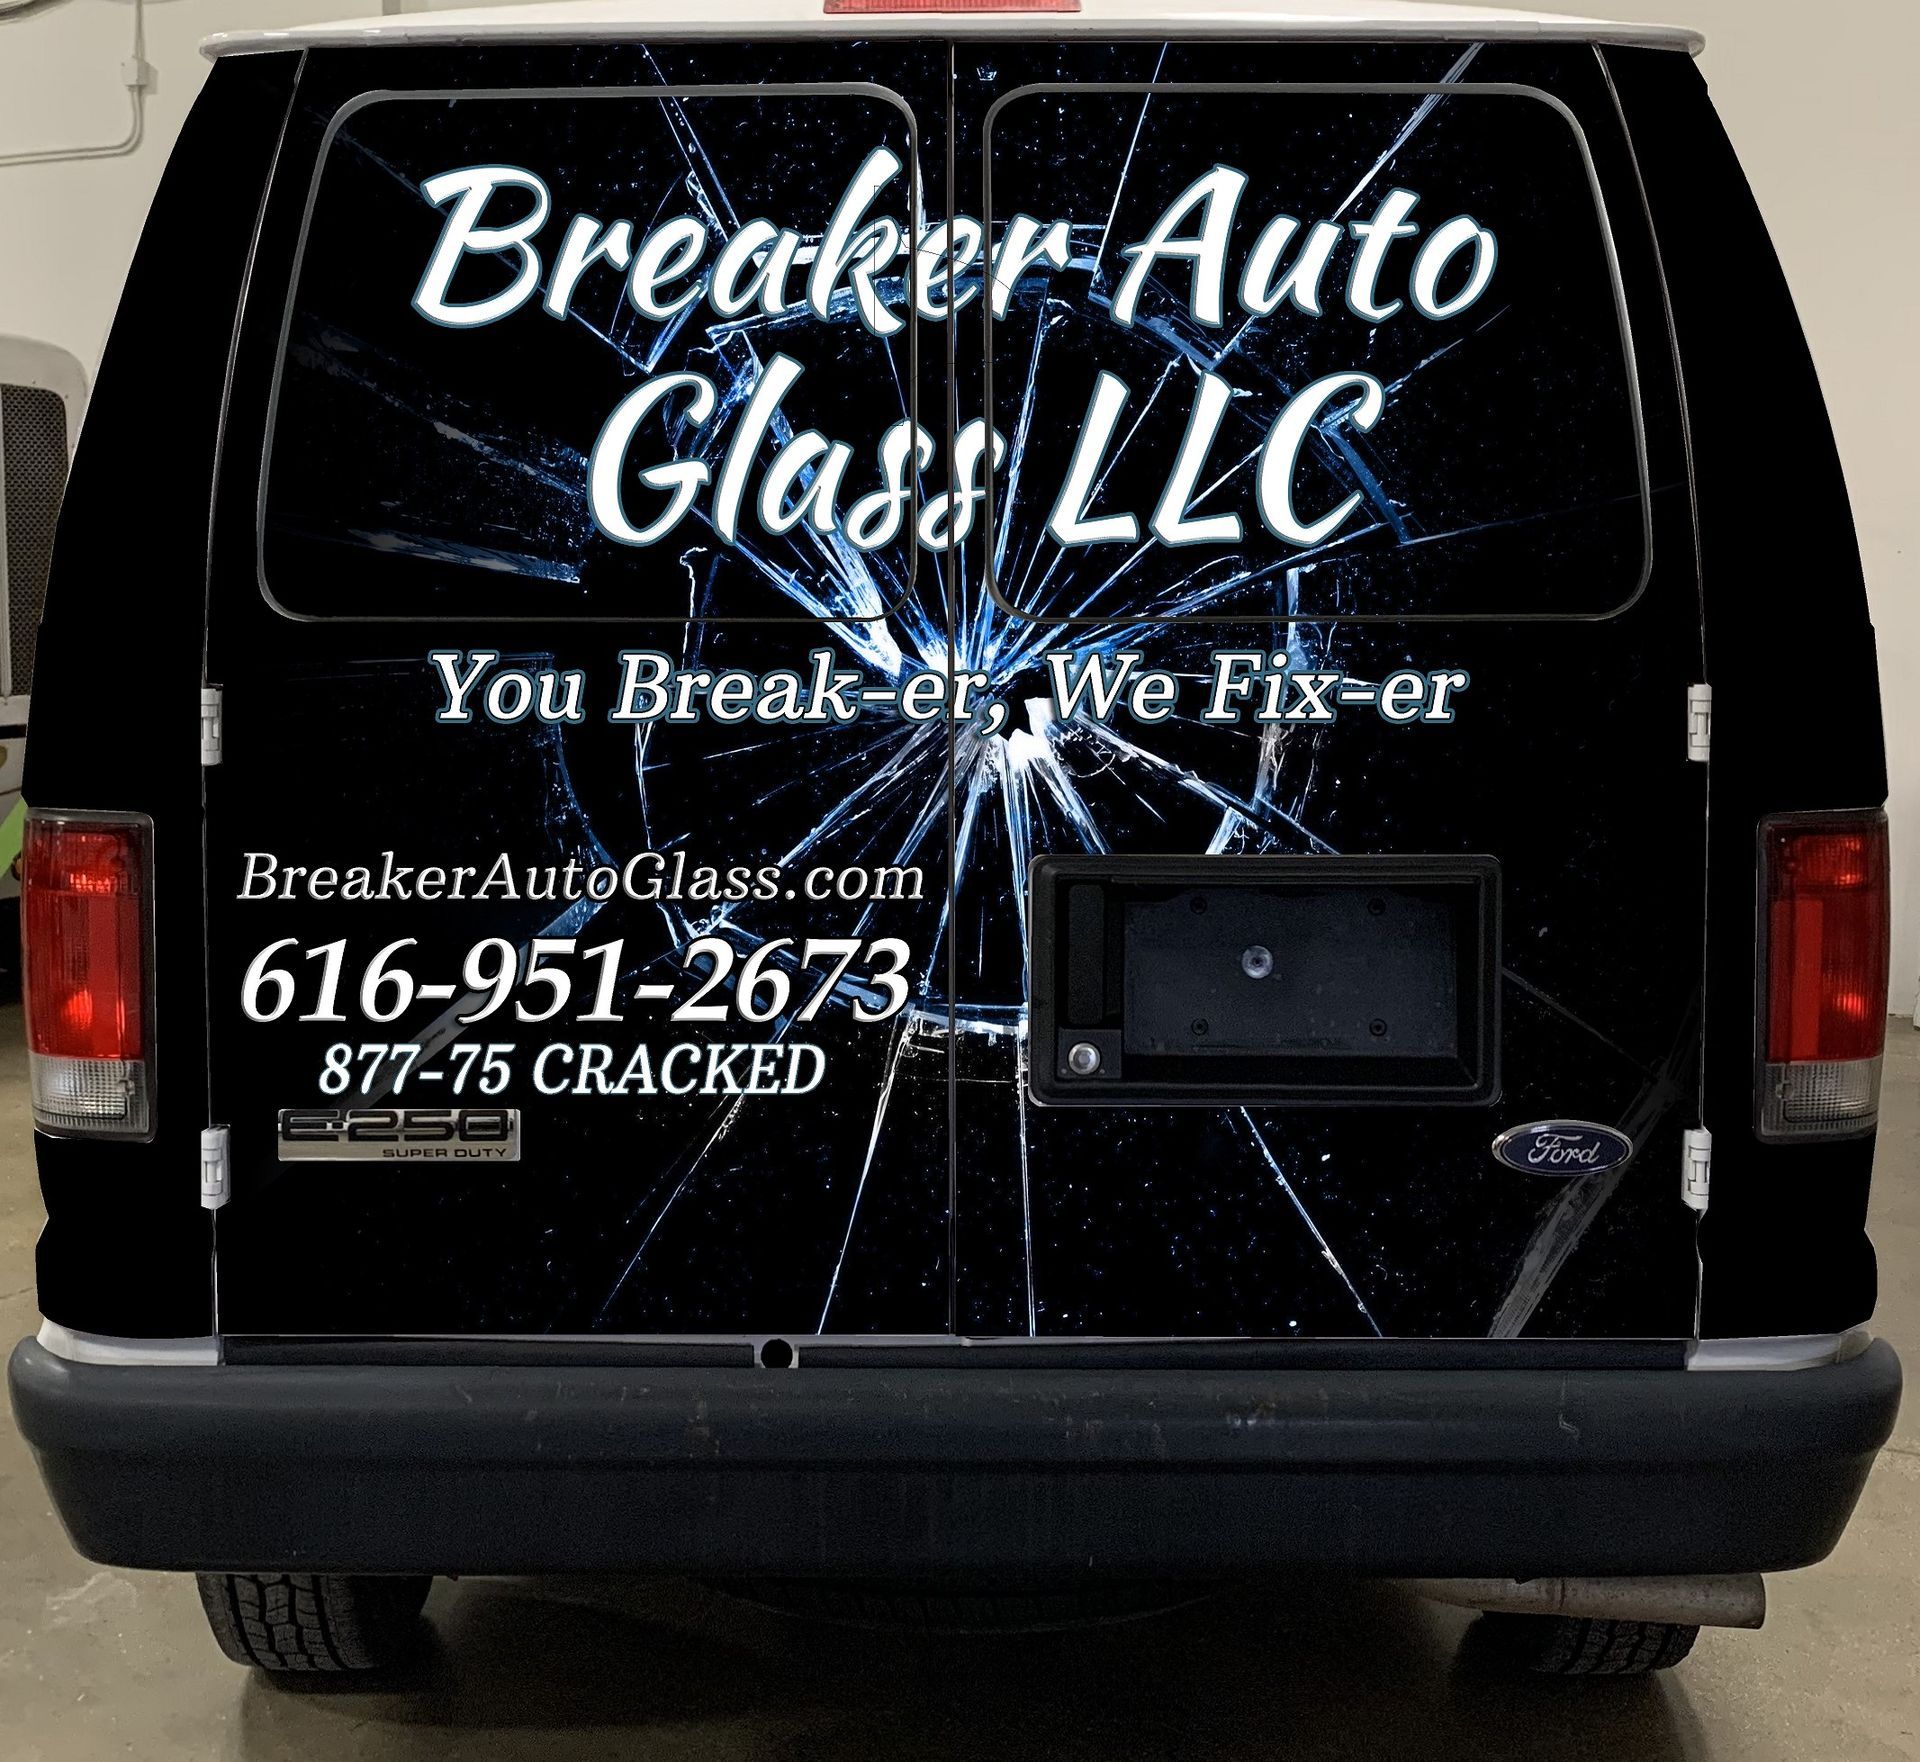 back of Breaker Auto Glass LLC service van